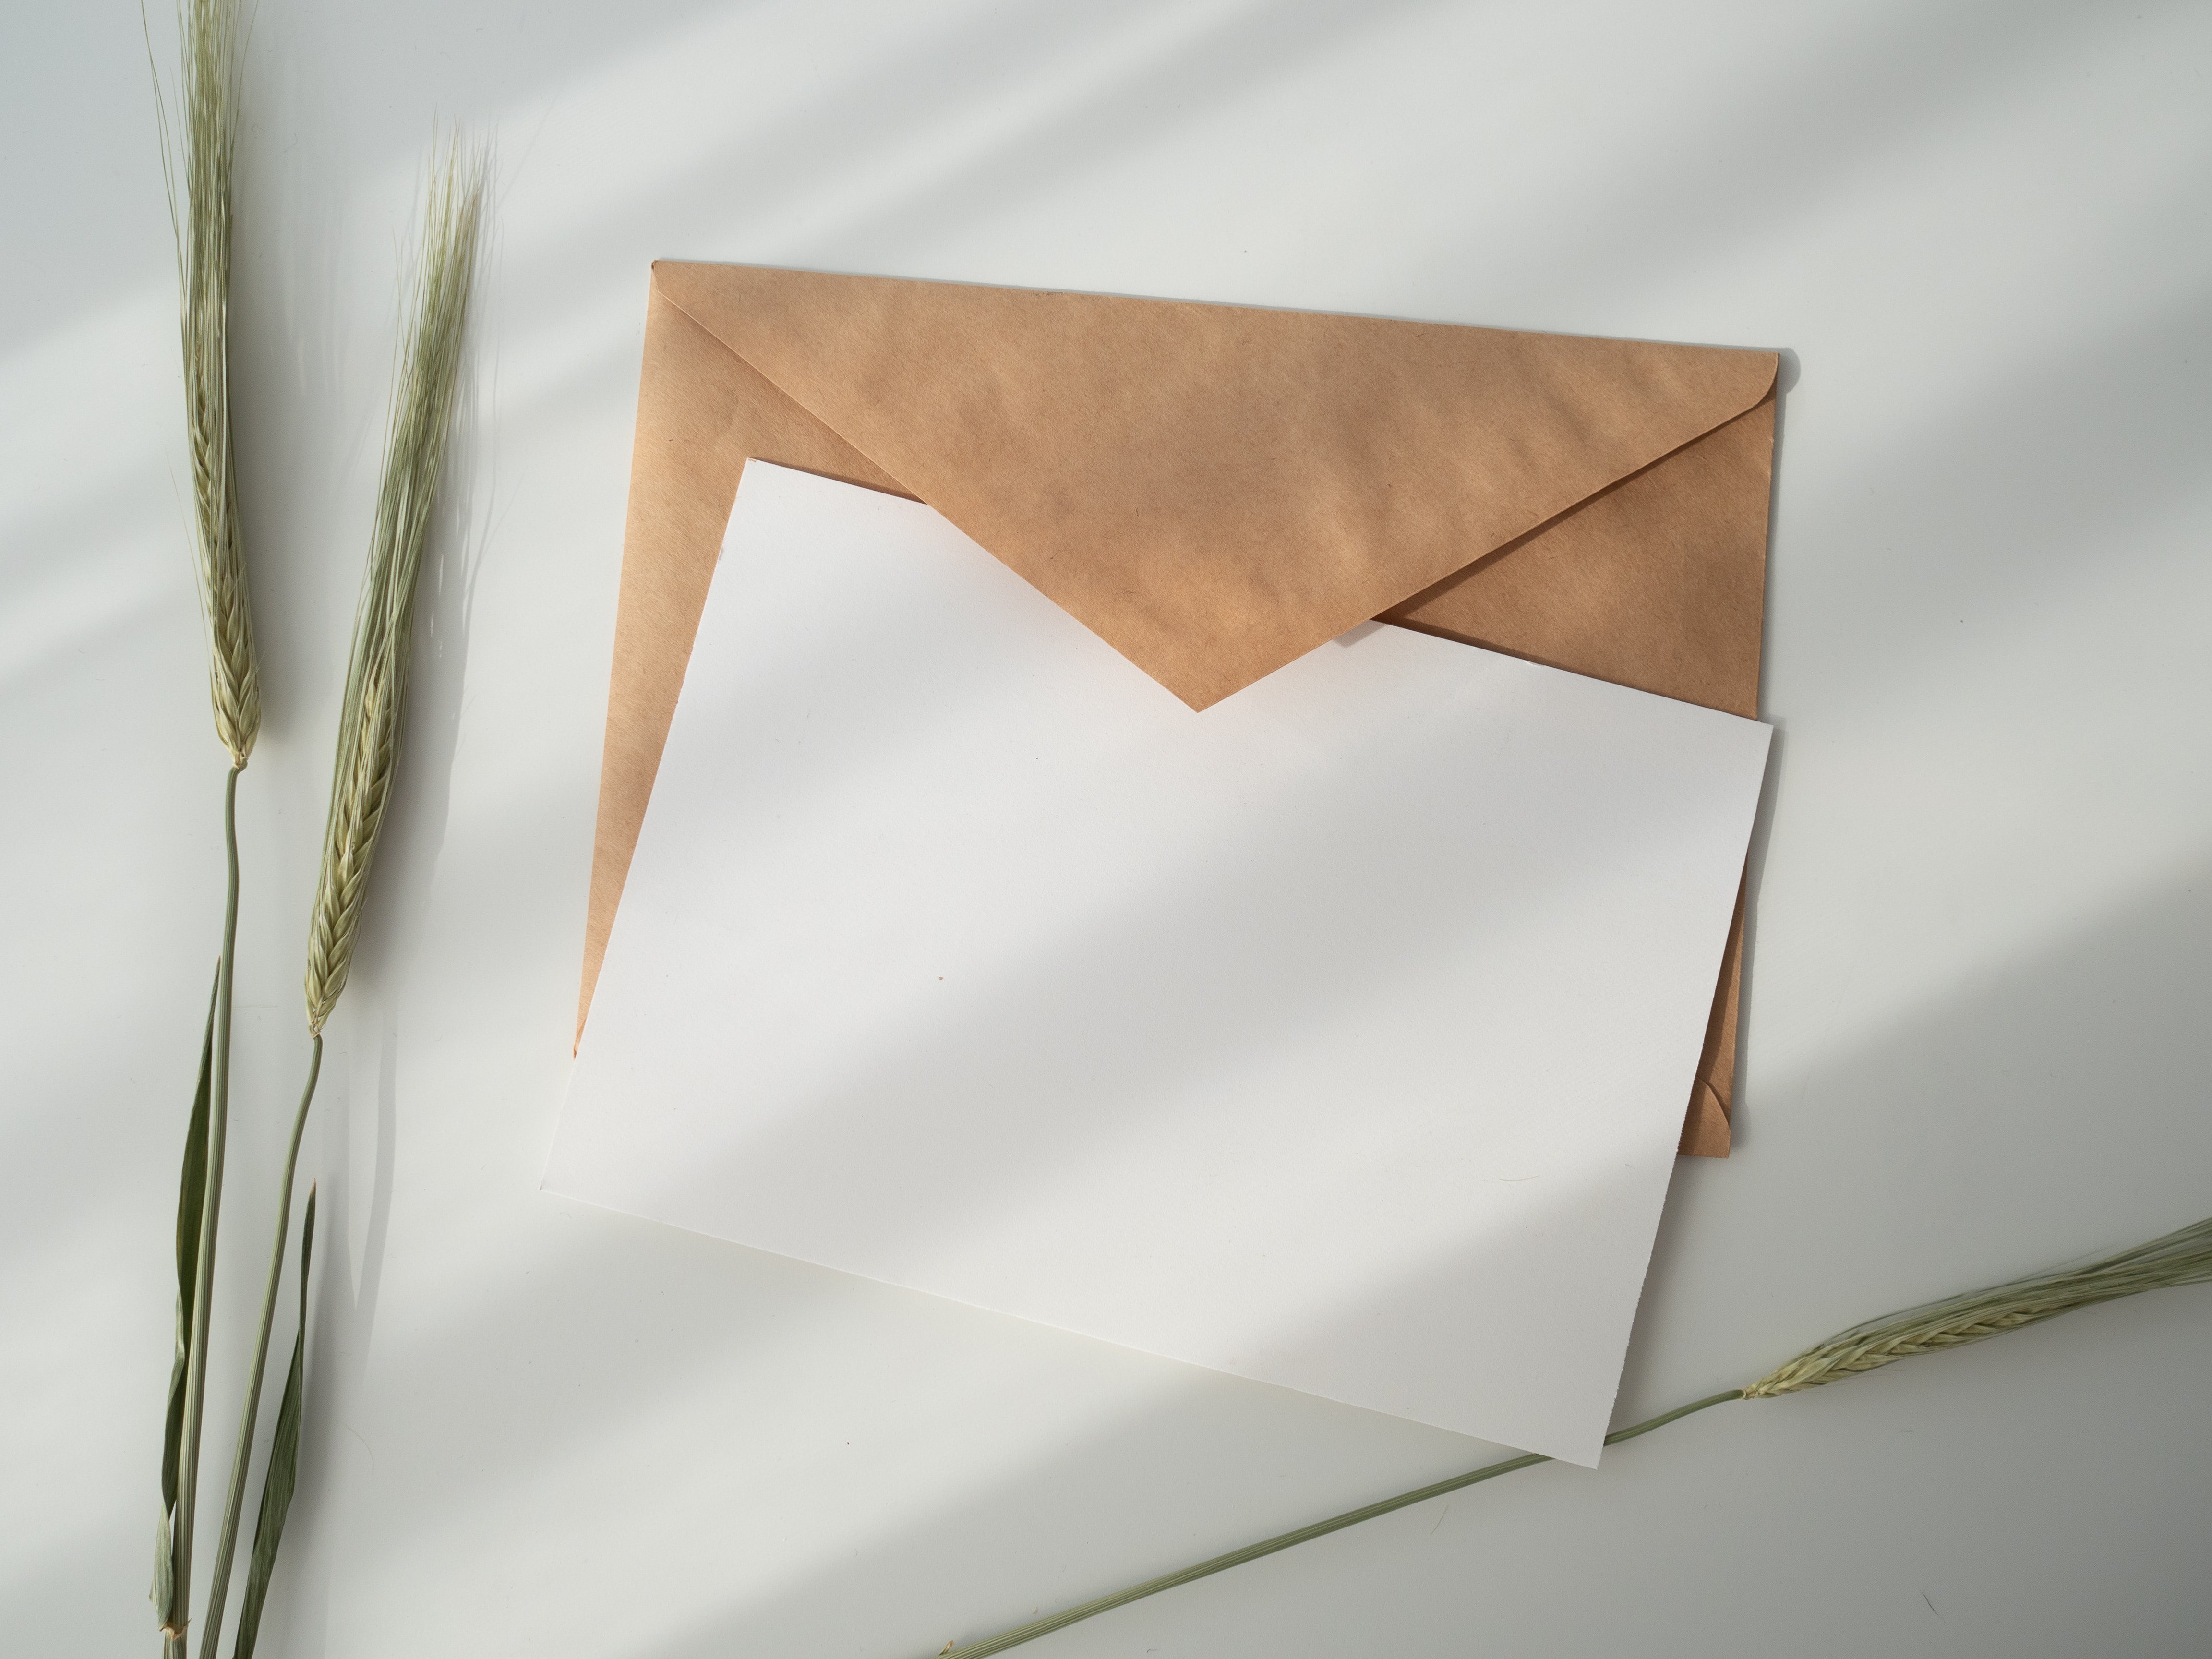 An envelope | Source: Unsplash.com